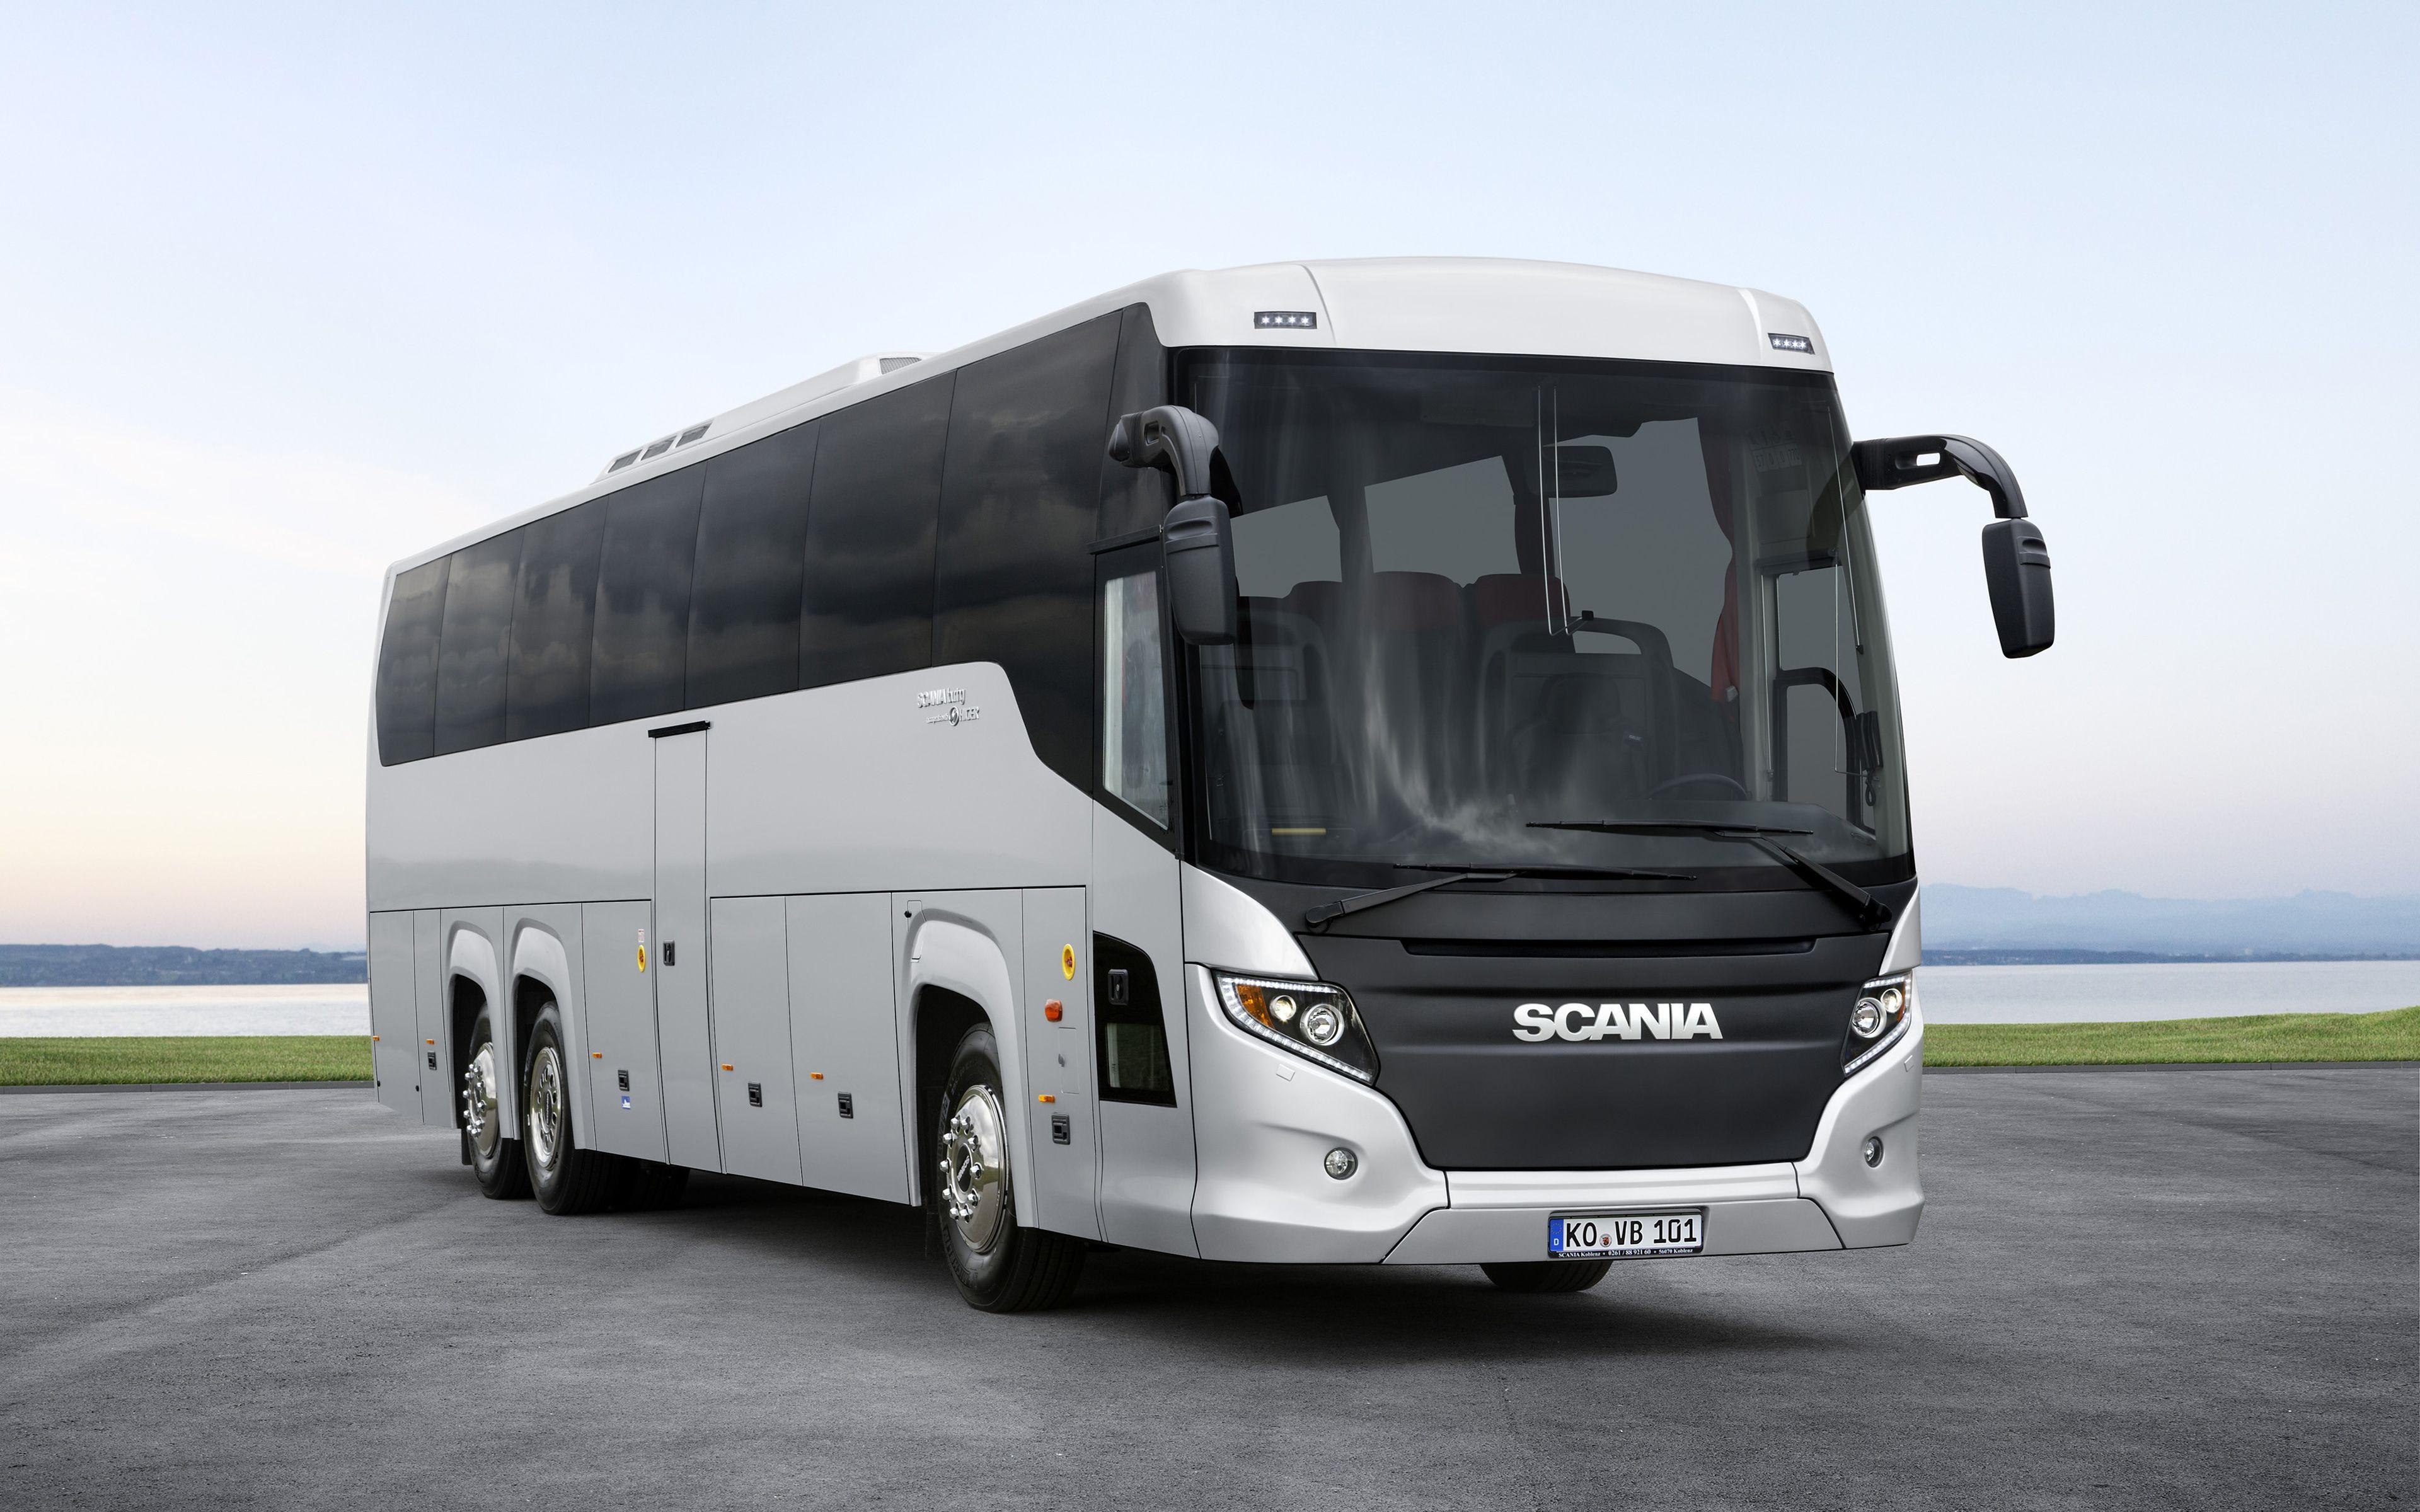 Download wallpaper Scania Touring, 4k, road, 2018 buses, passenger